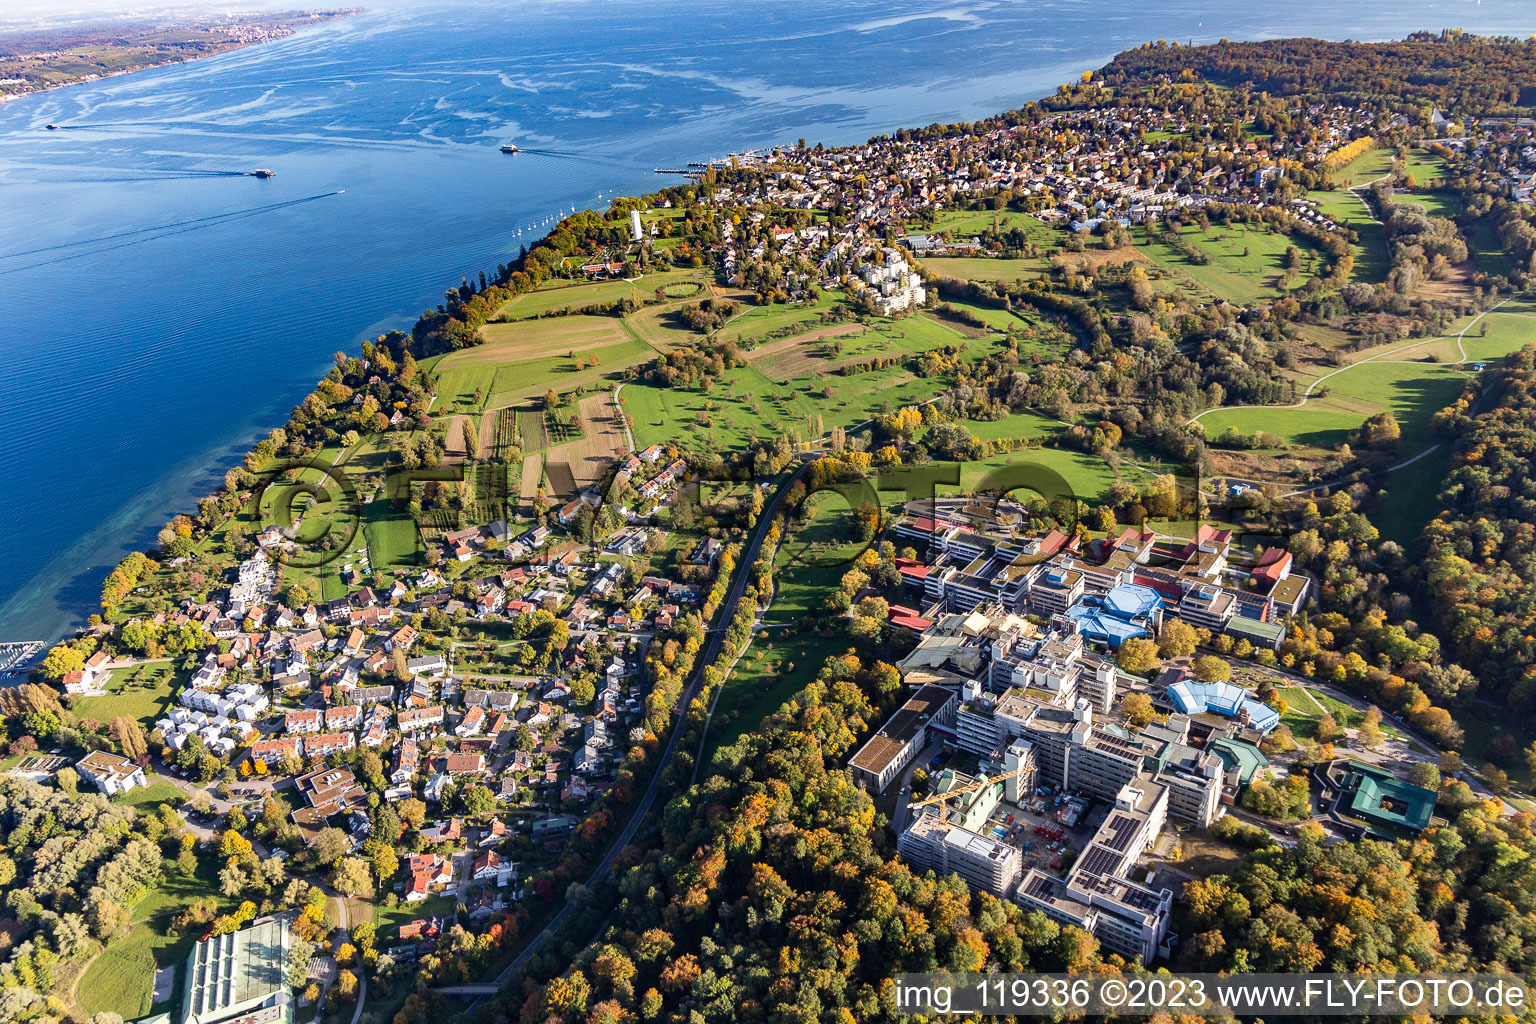 Aerial view of The University of Konstanz in Konstanz in Baden-Wuerttemberg